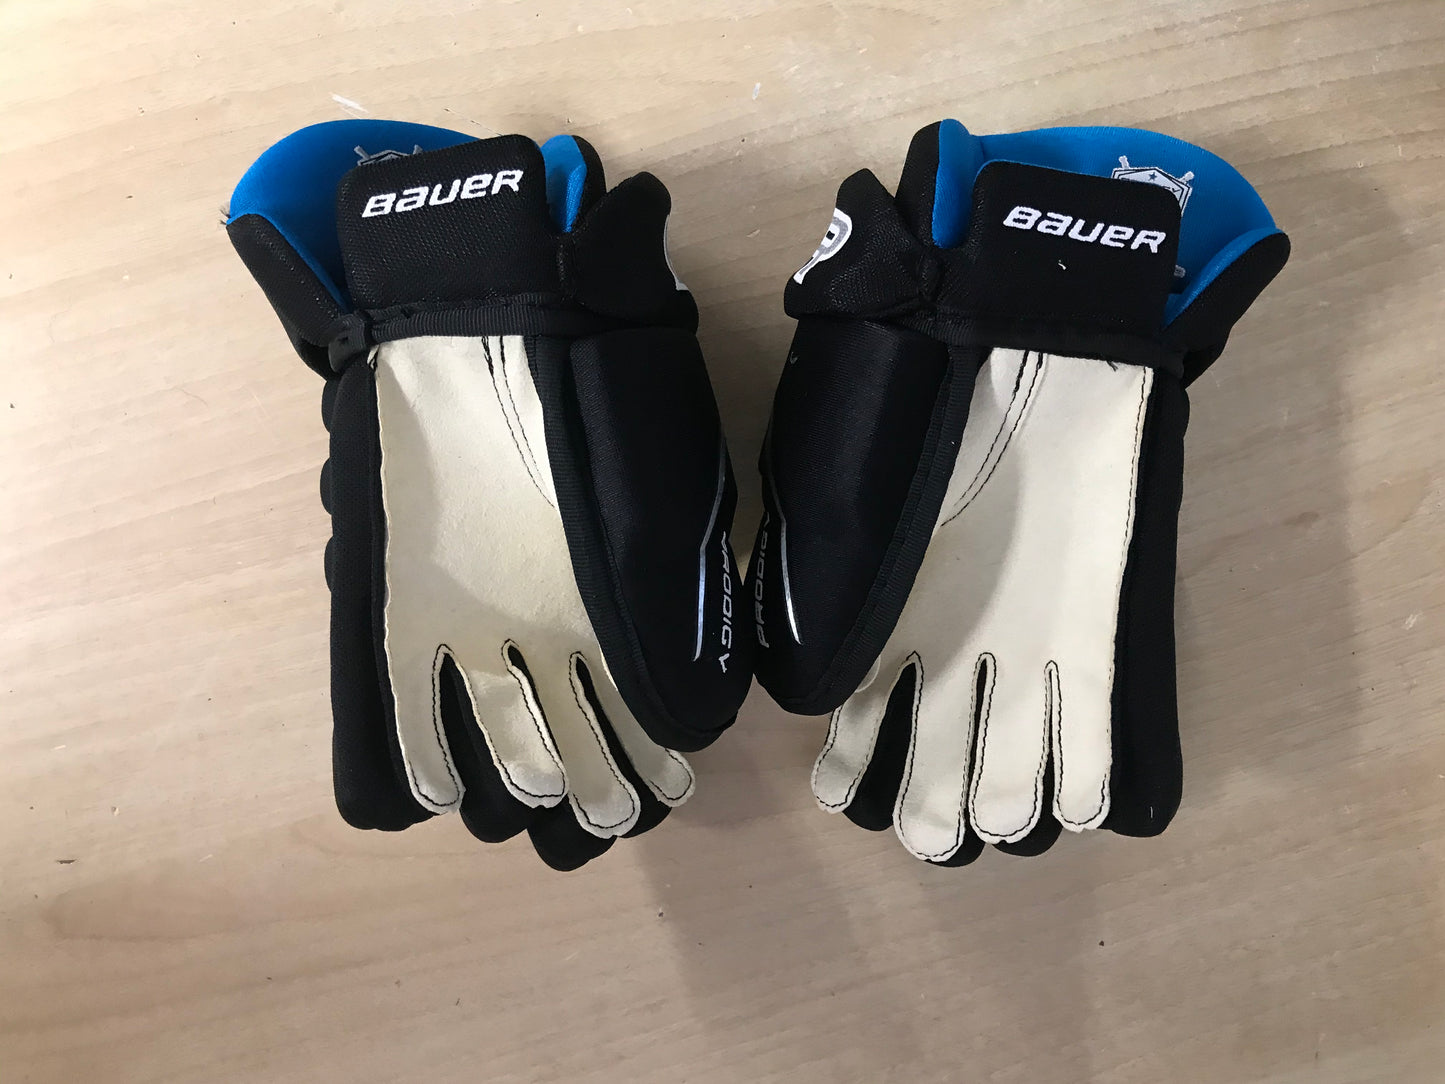 Hockey Gloves Child Size 9 inch Bauer Prodegy Black Blue Silver New Demo Model